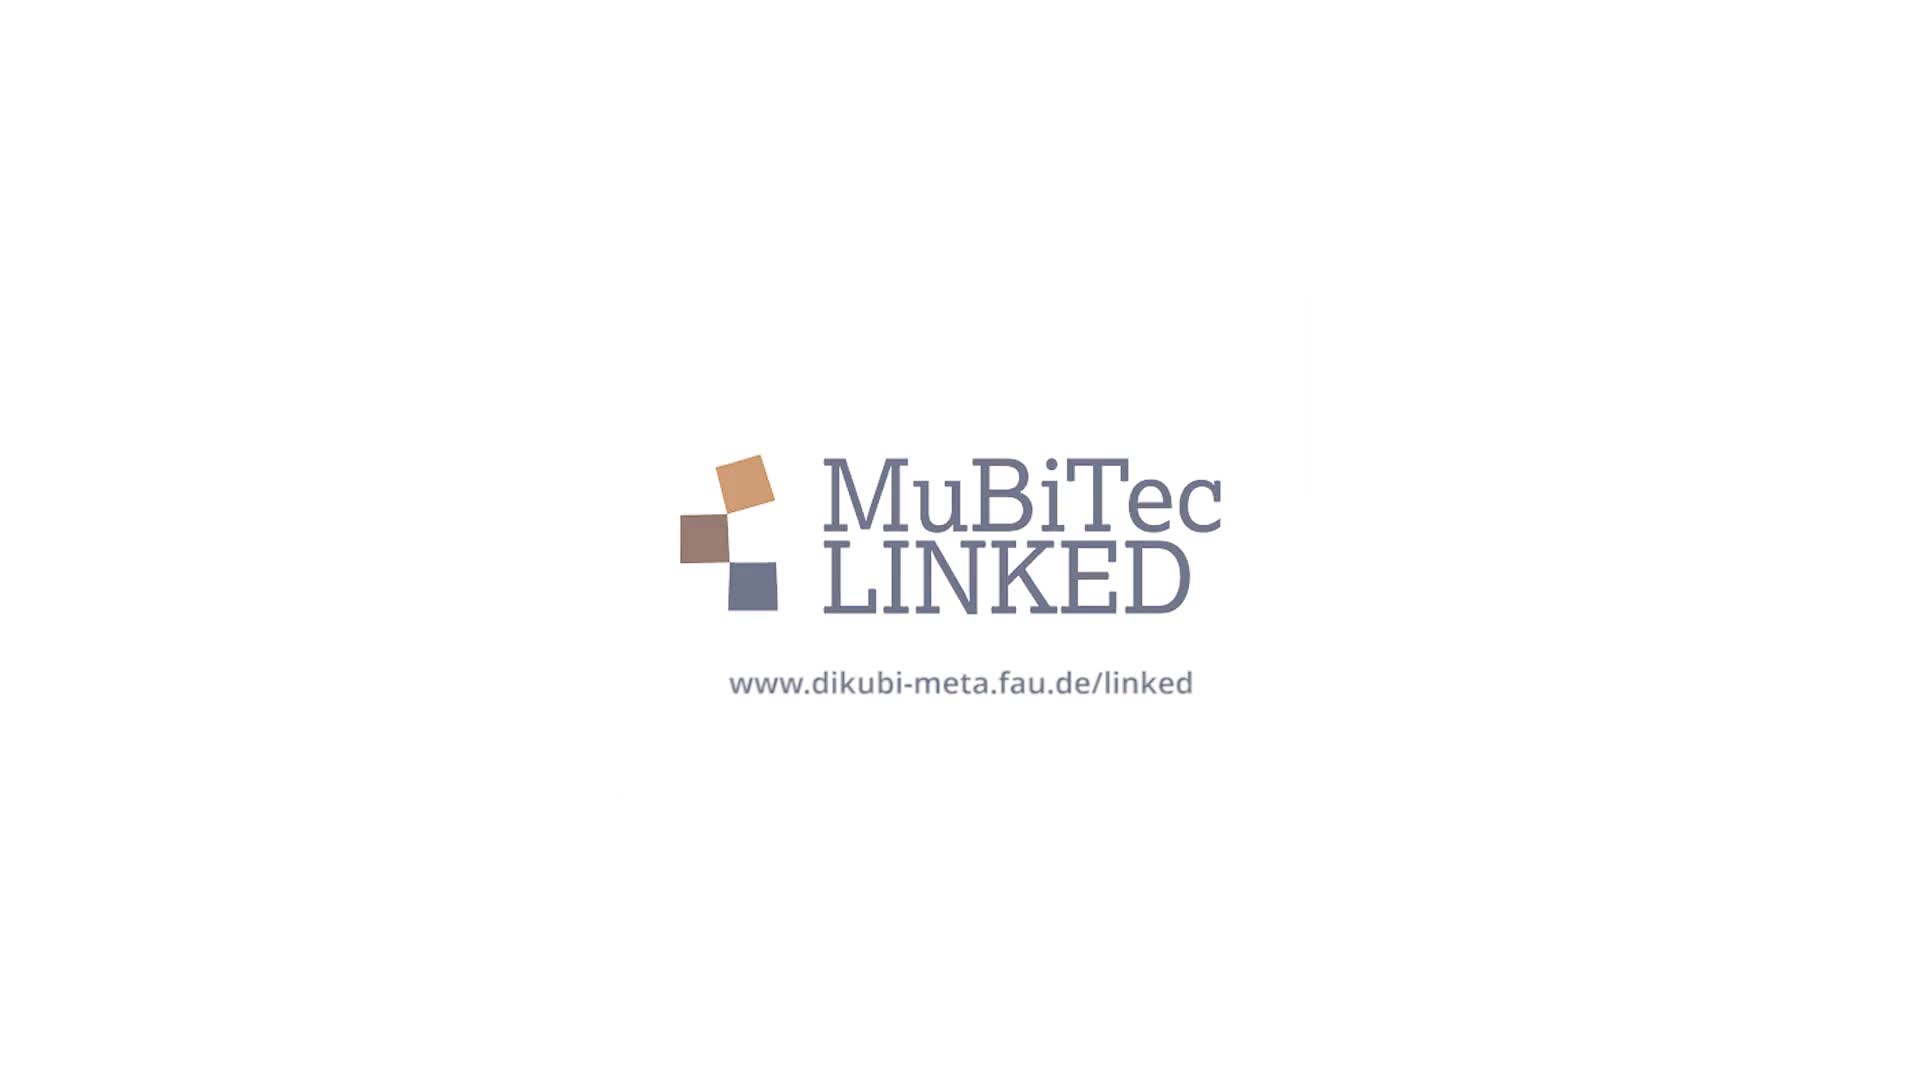 MuBiTec_LINKED preview image